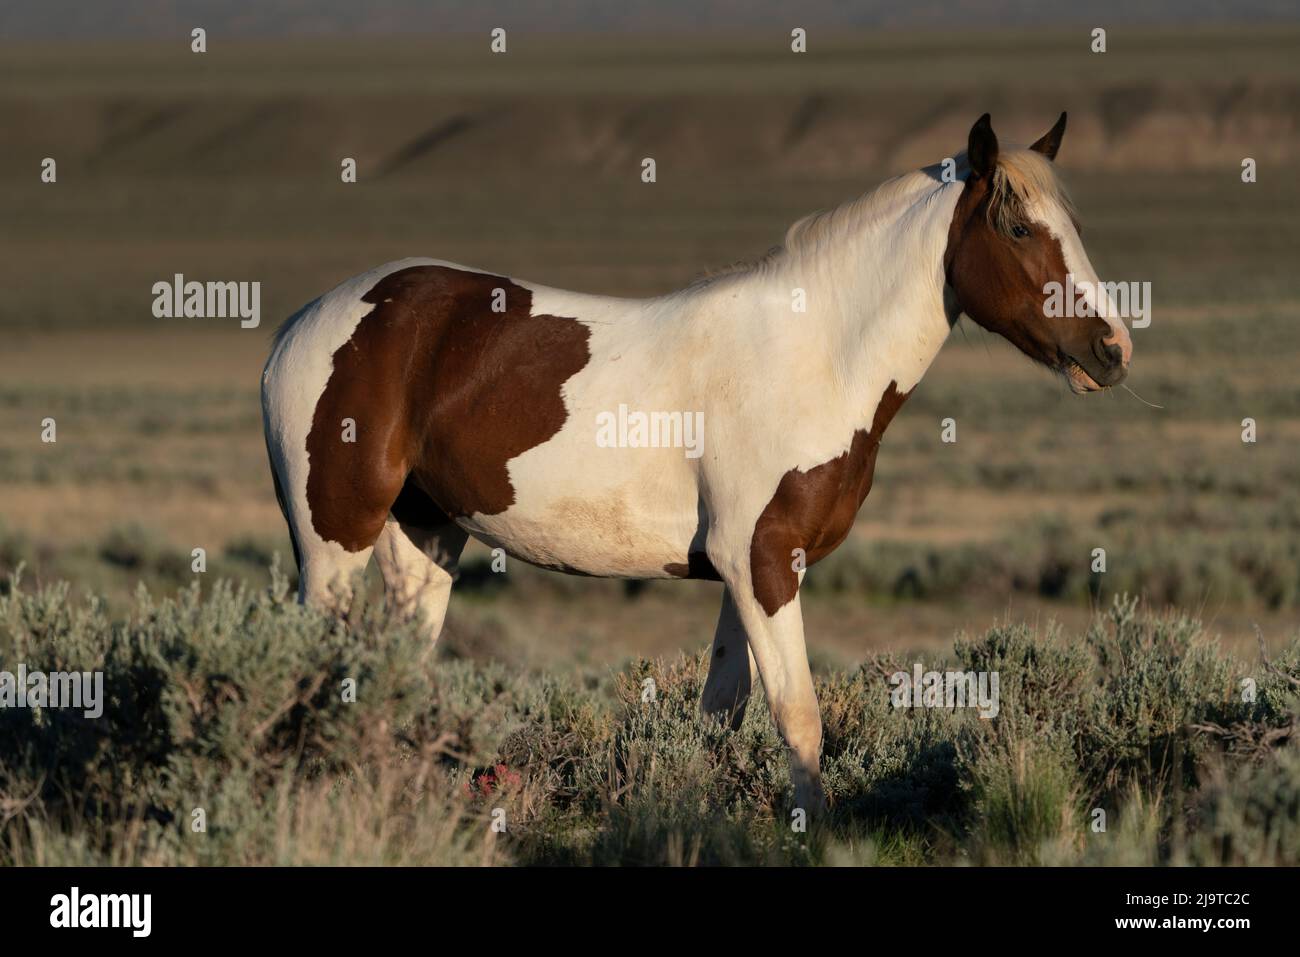 USA, Wyoming. Wild stallion stands in desert sage brush. Stock Photo